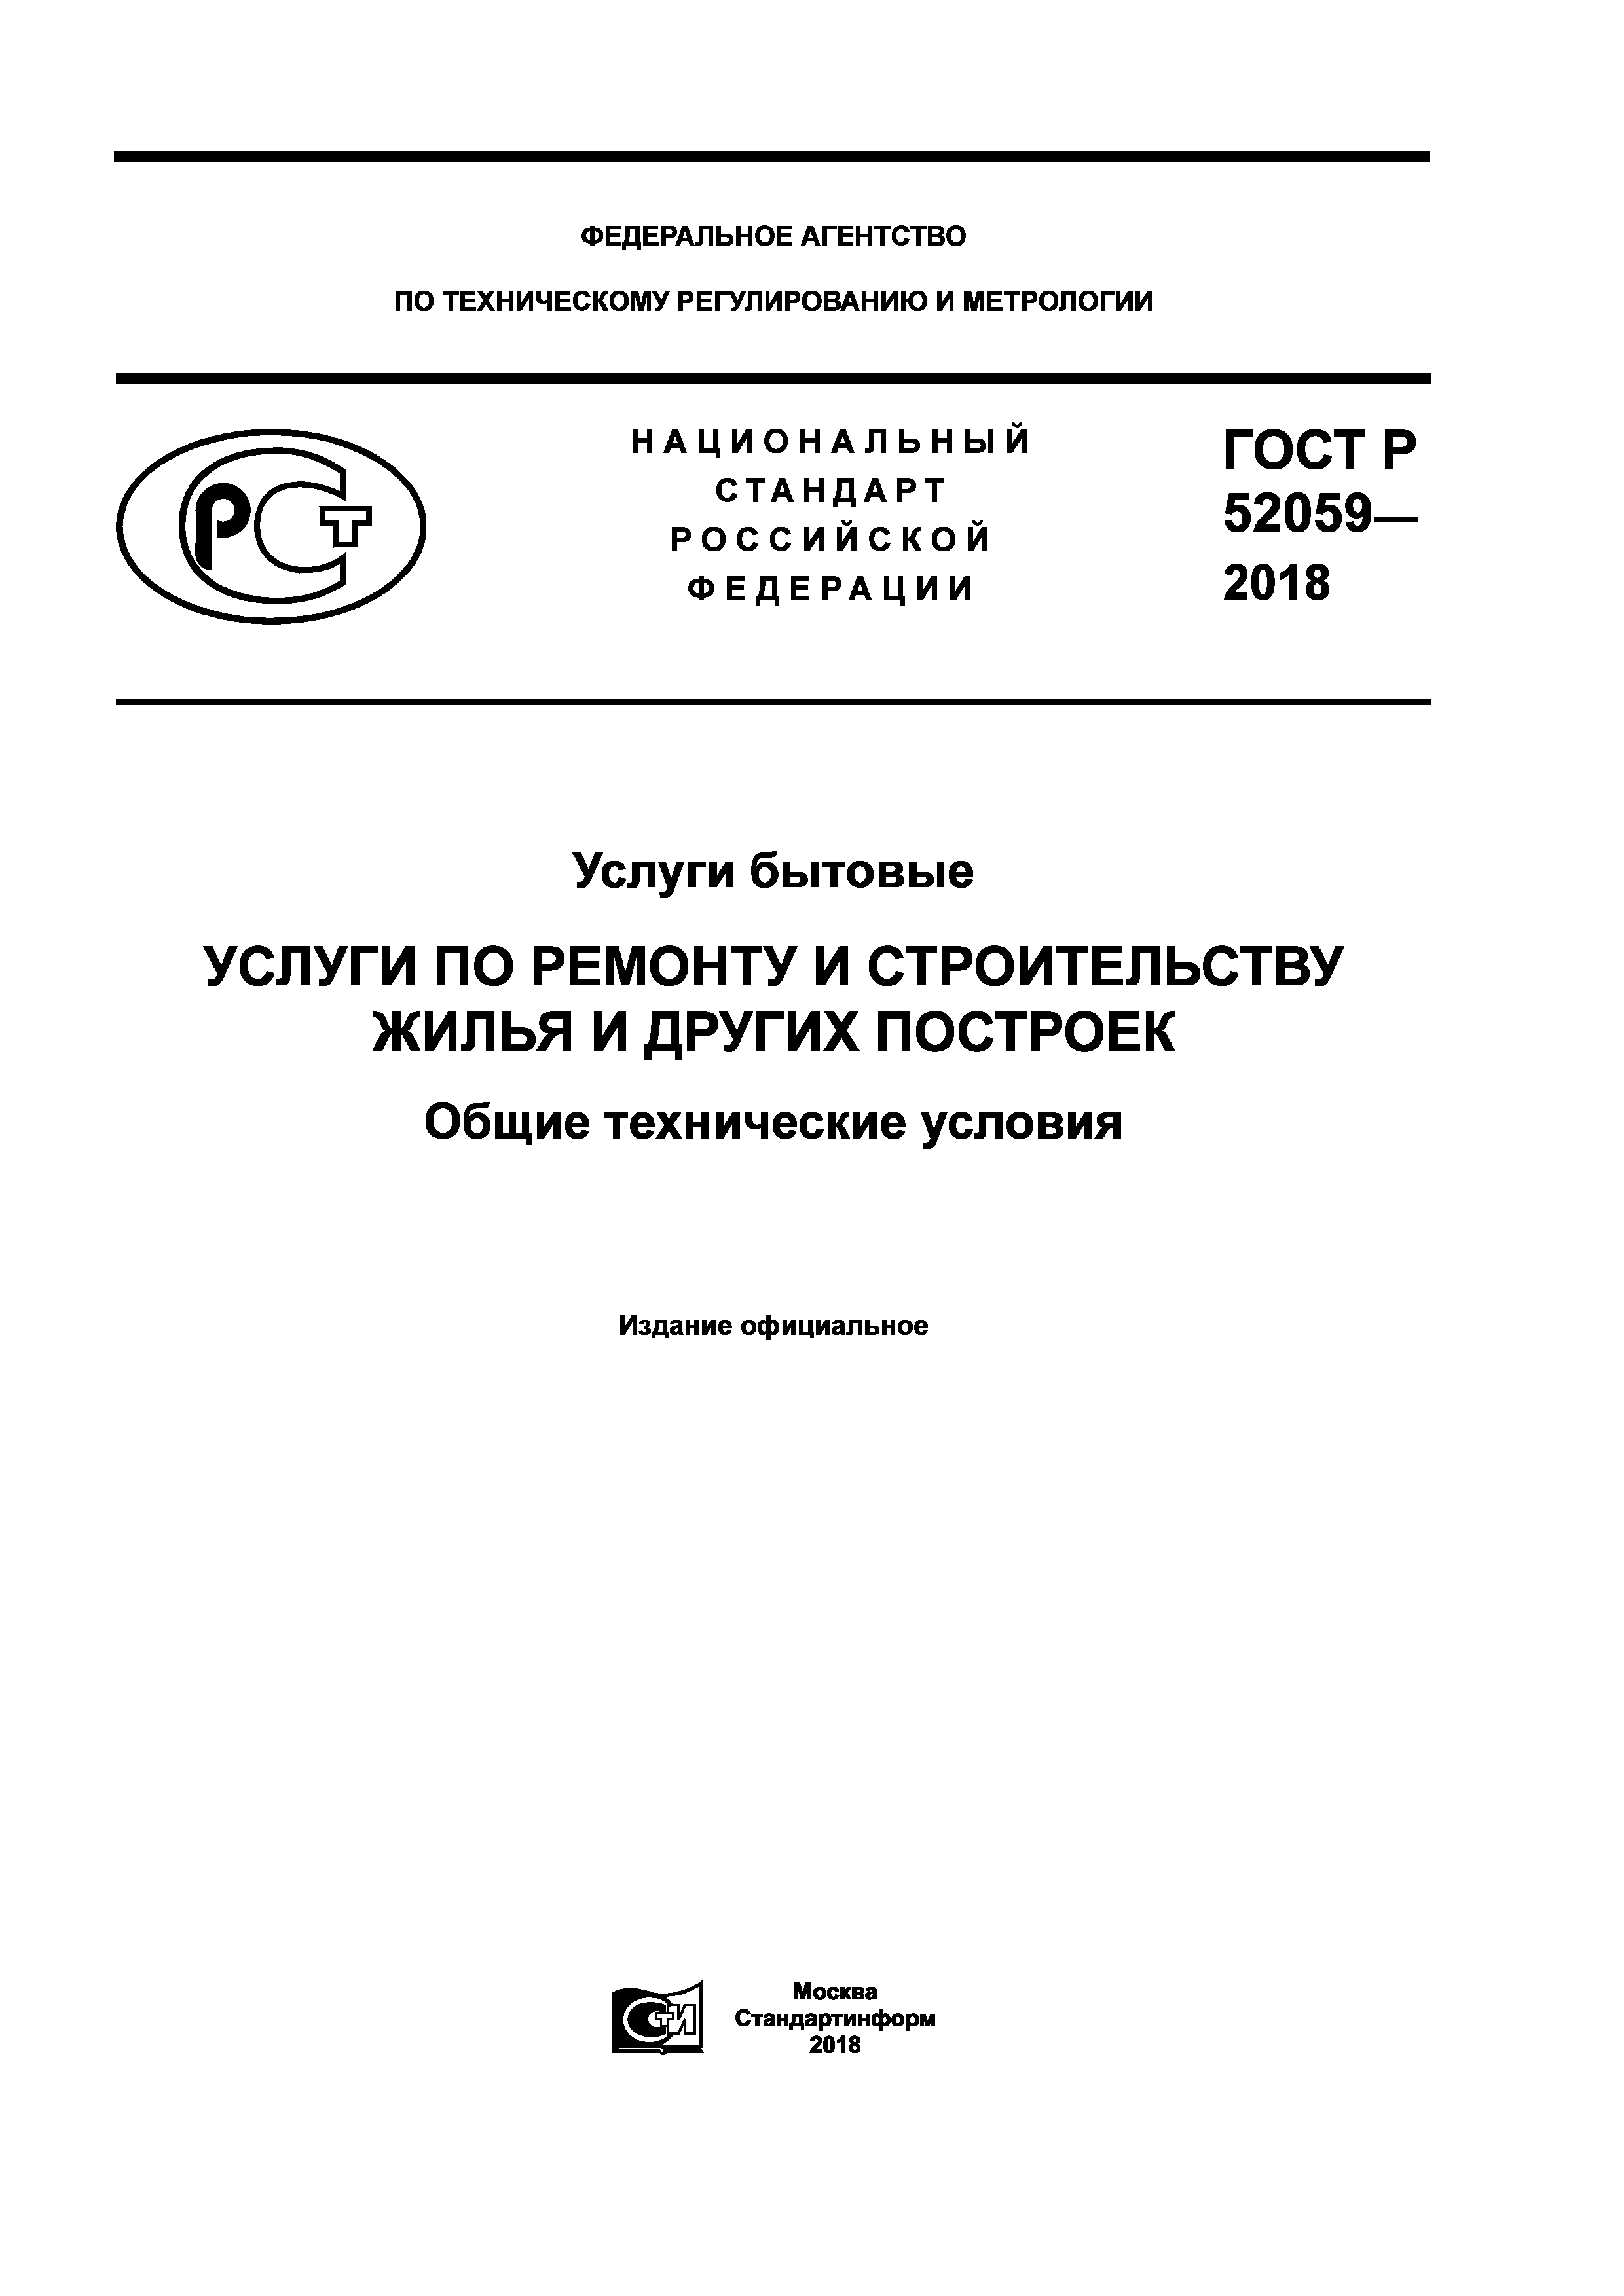 ГОСТ Р 52059-2018